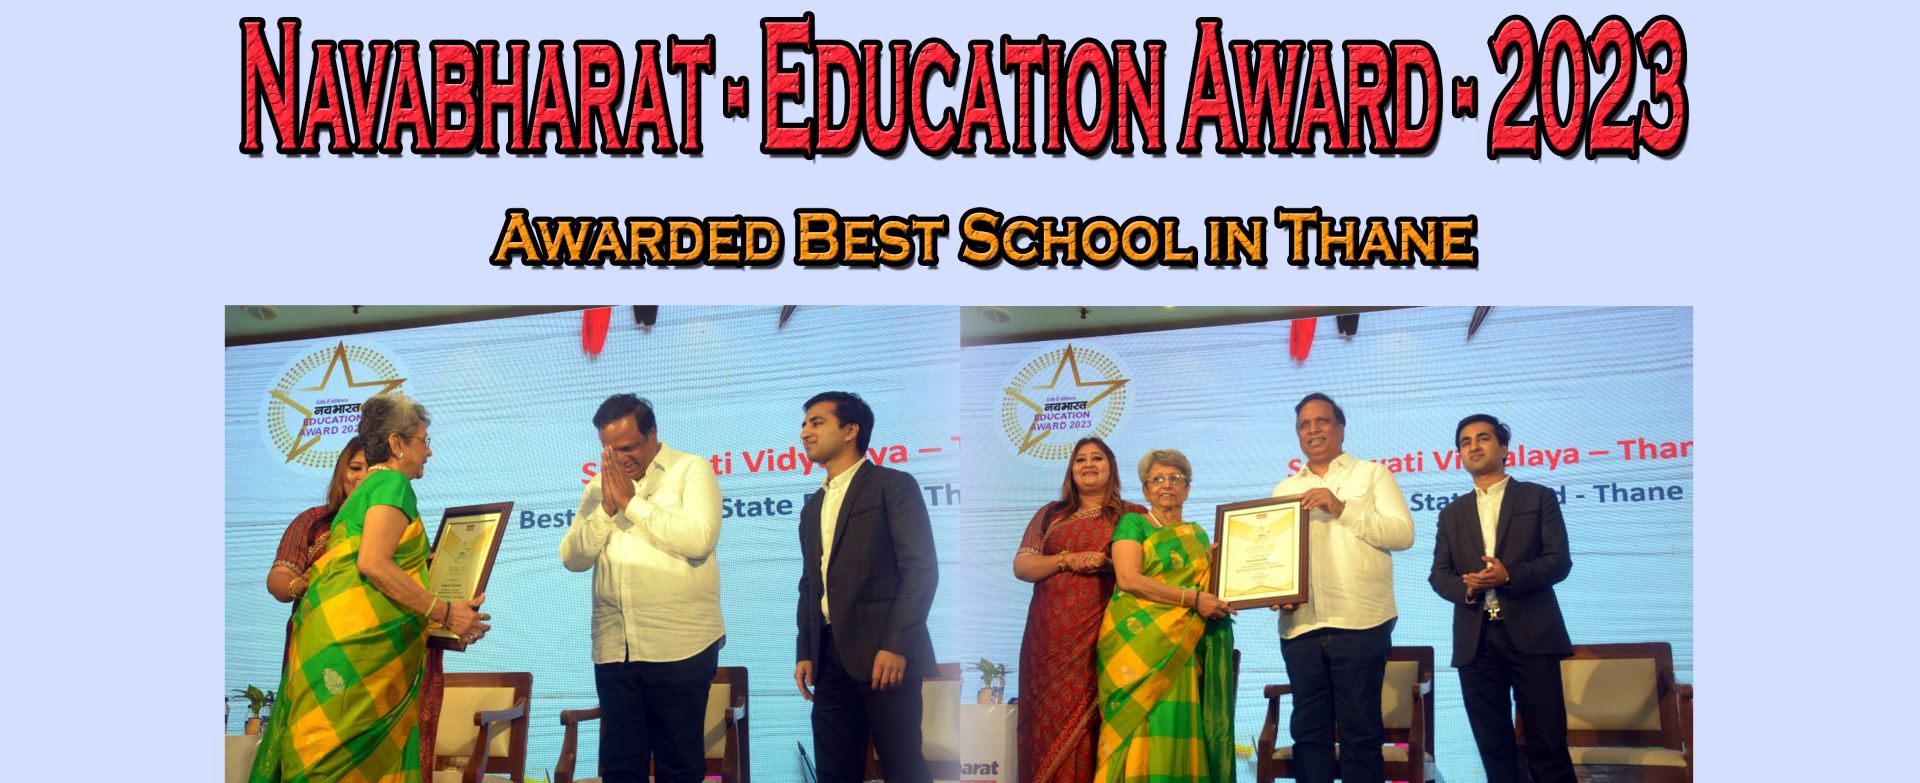 Navabharat - Education Award 2023 | Saraswati Vidyalaya State Board High School and Junior college of Commerce and Science in GB Road Thane